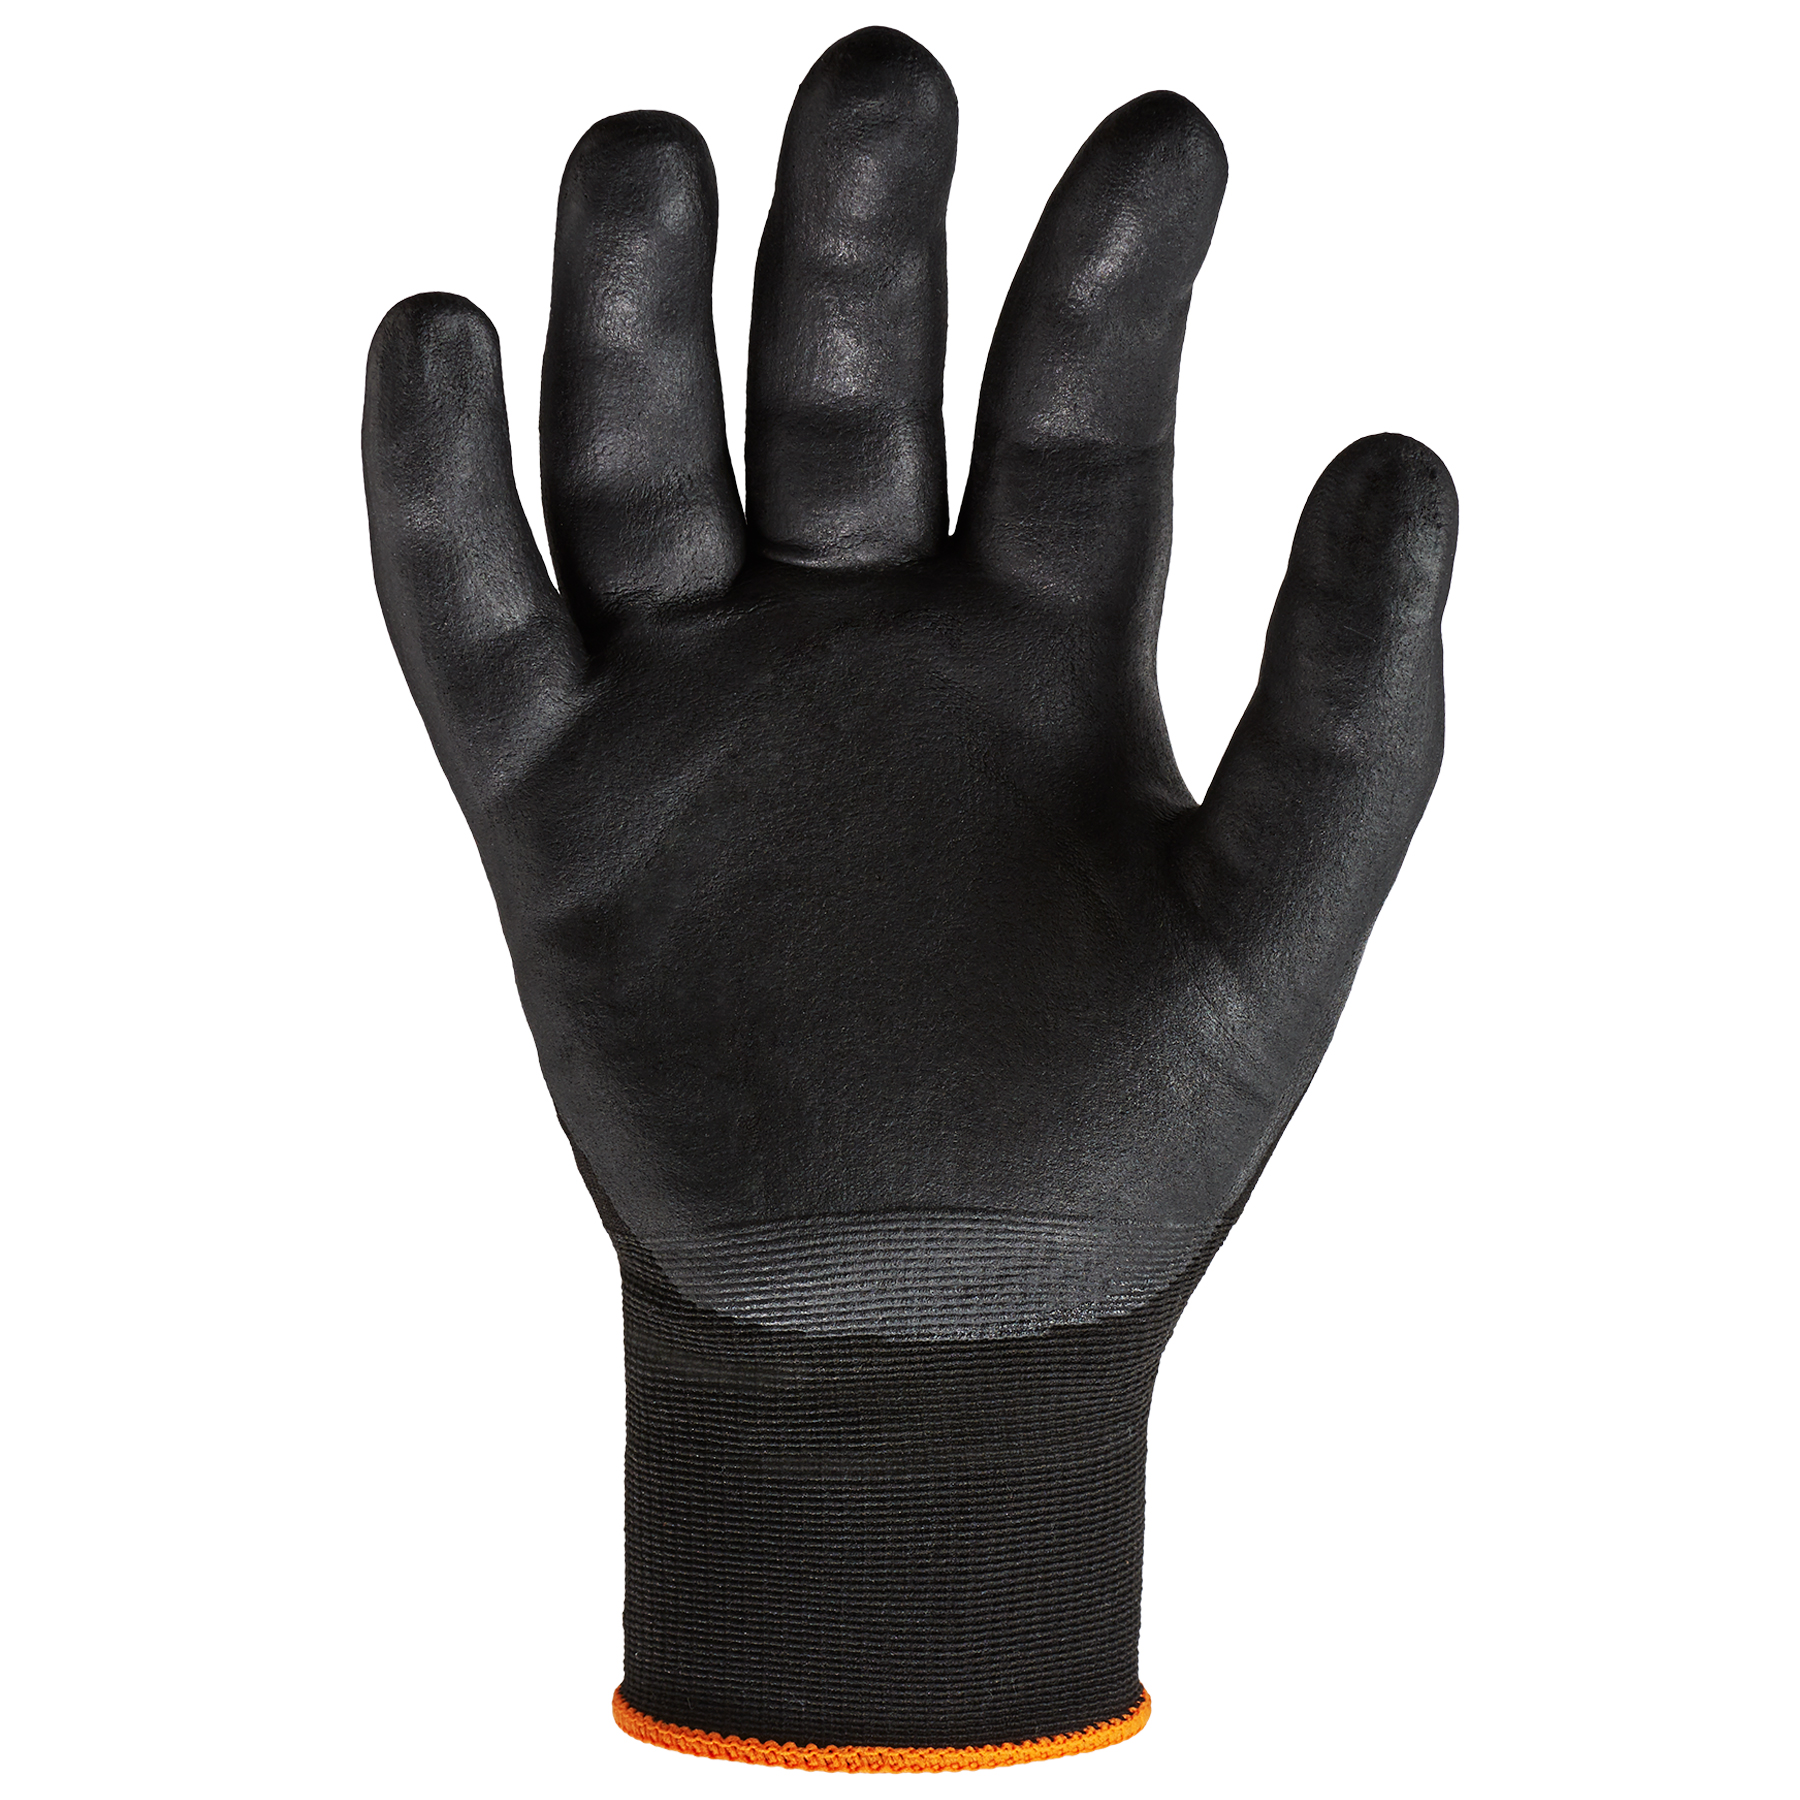 https://www.ergodyne.com/sites/default/files/product-images/17951-7001-nitrile-coated-gloves-palm_0.jpg